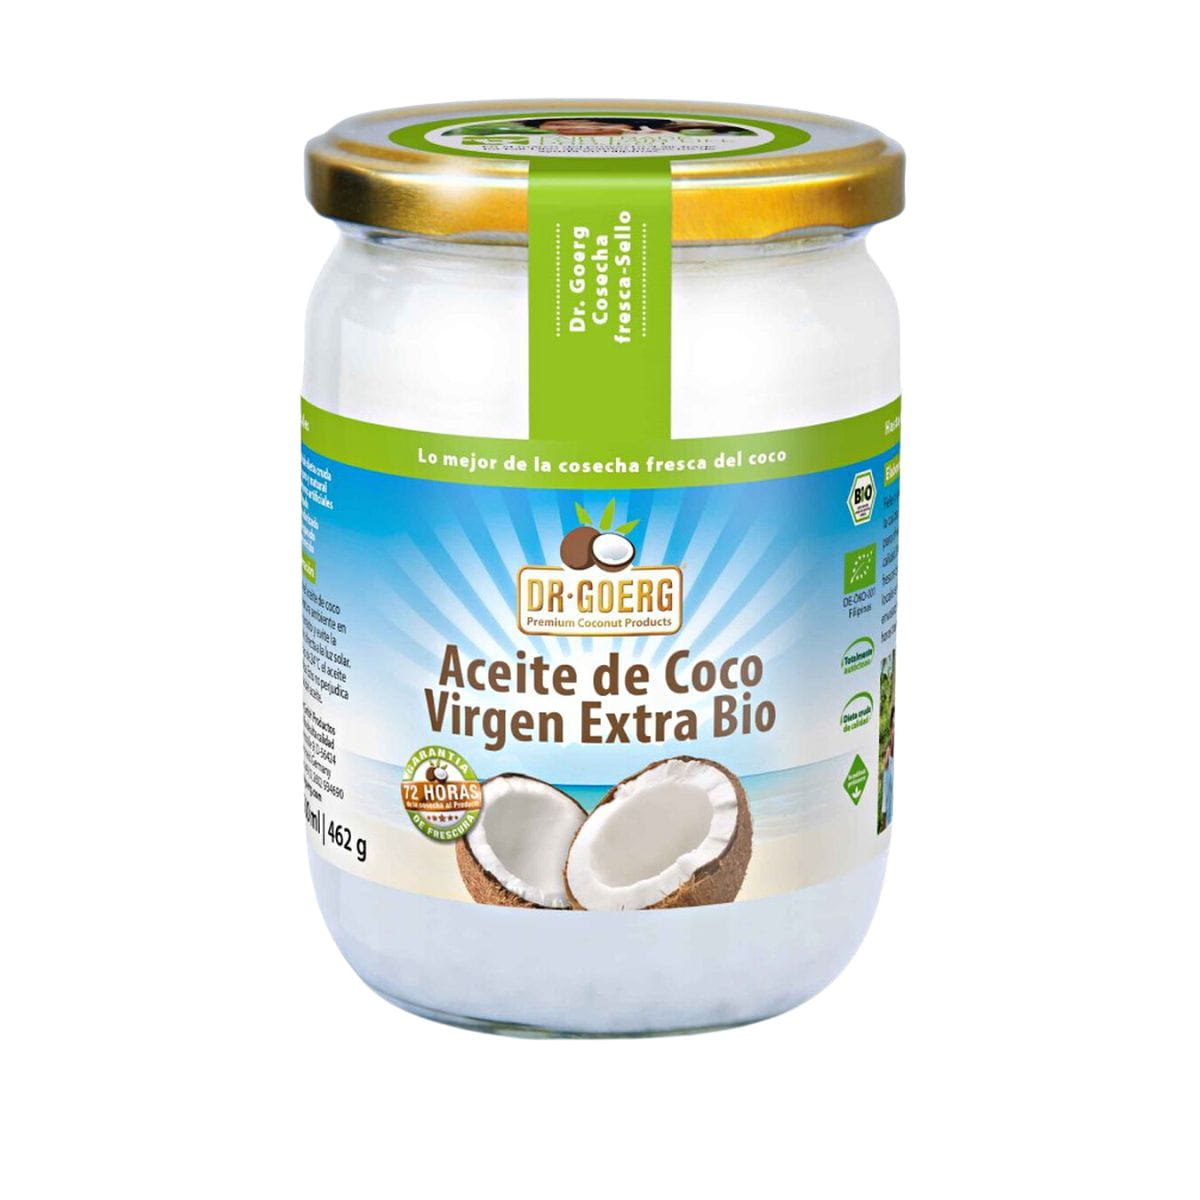 Aceite de Lino BIO, 250 ml - NaturGreen en Aceites Vegetales